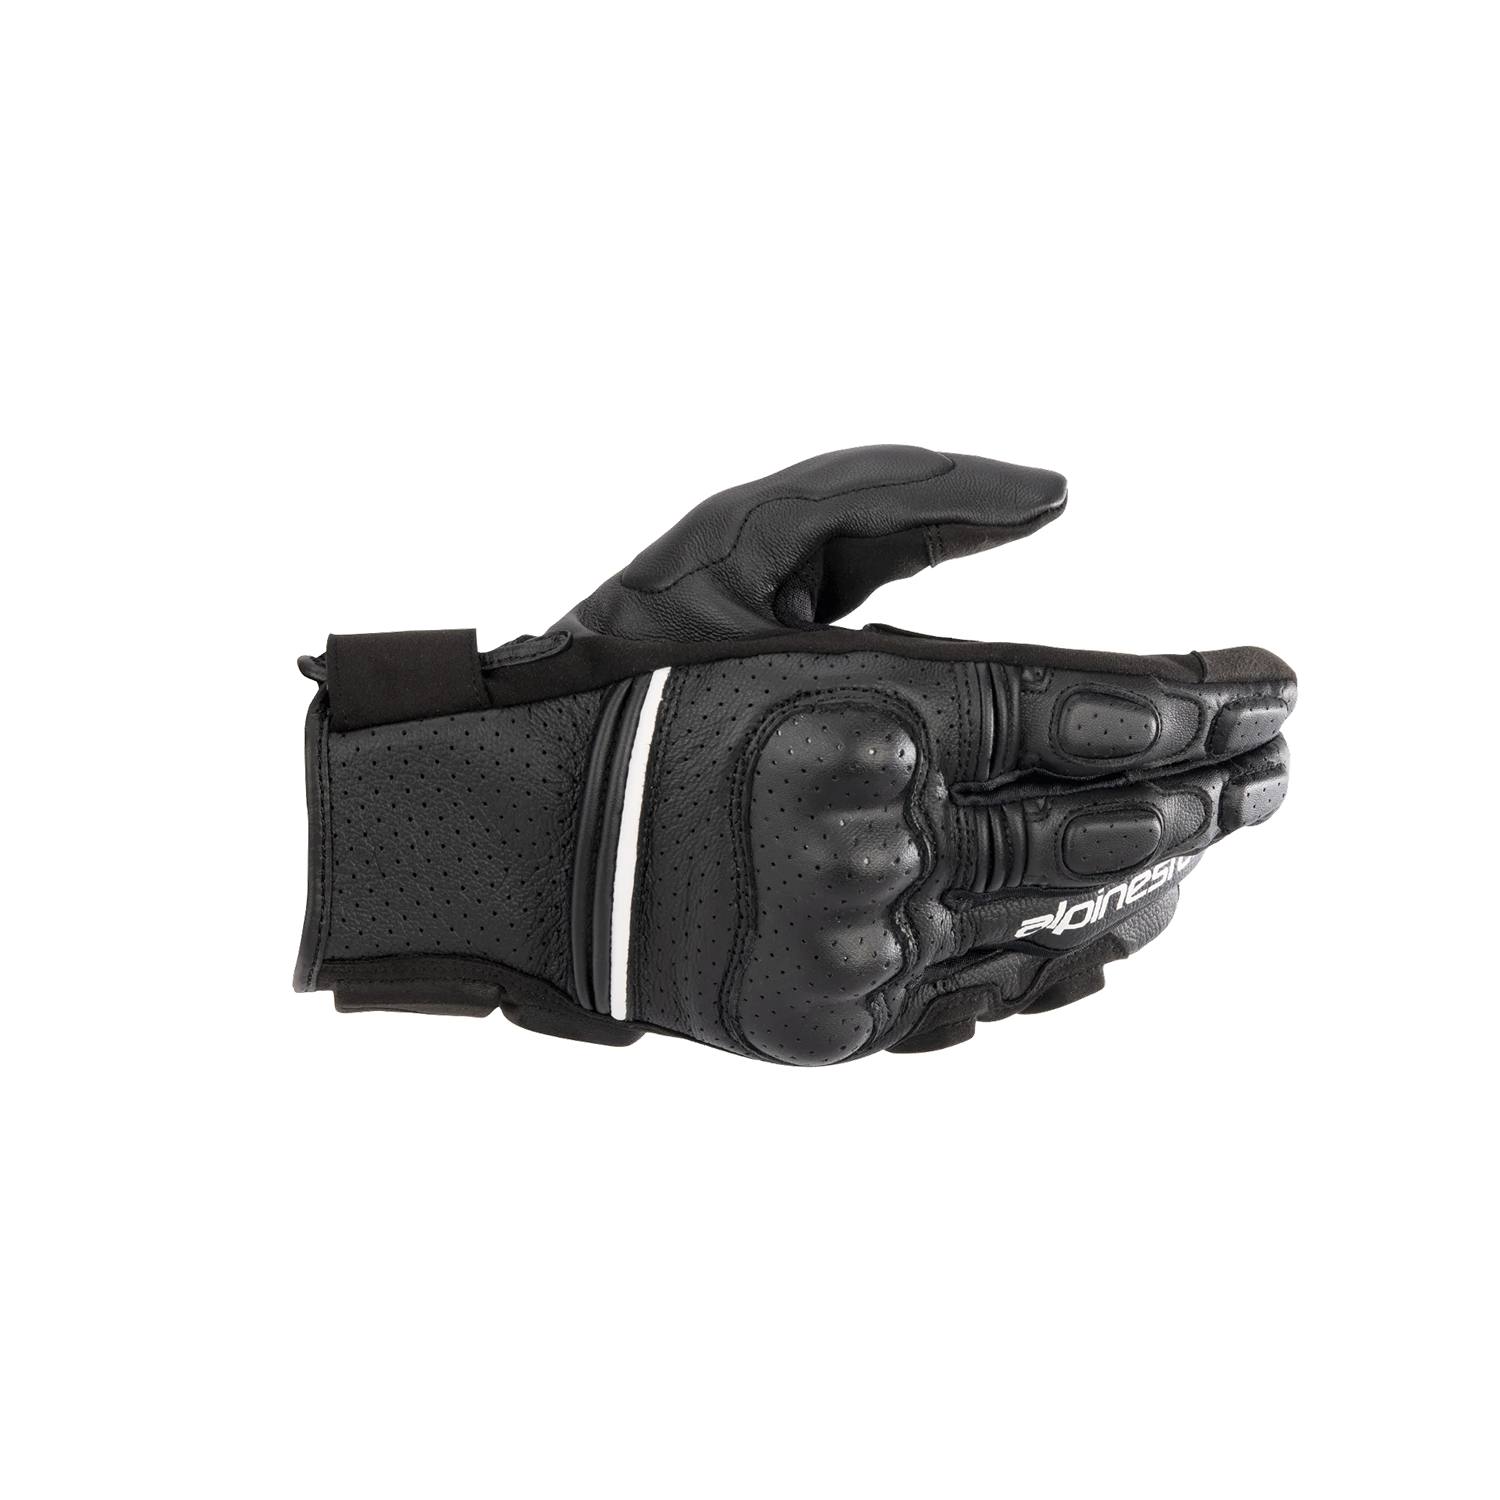 Image of Alpinestars Phenom Leather Air Gloves Black White Size M ID 8059347146089